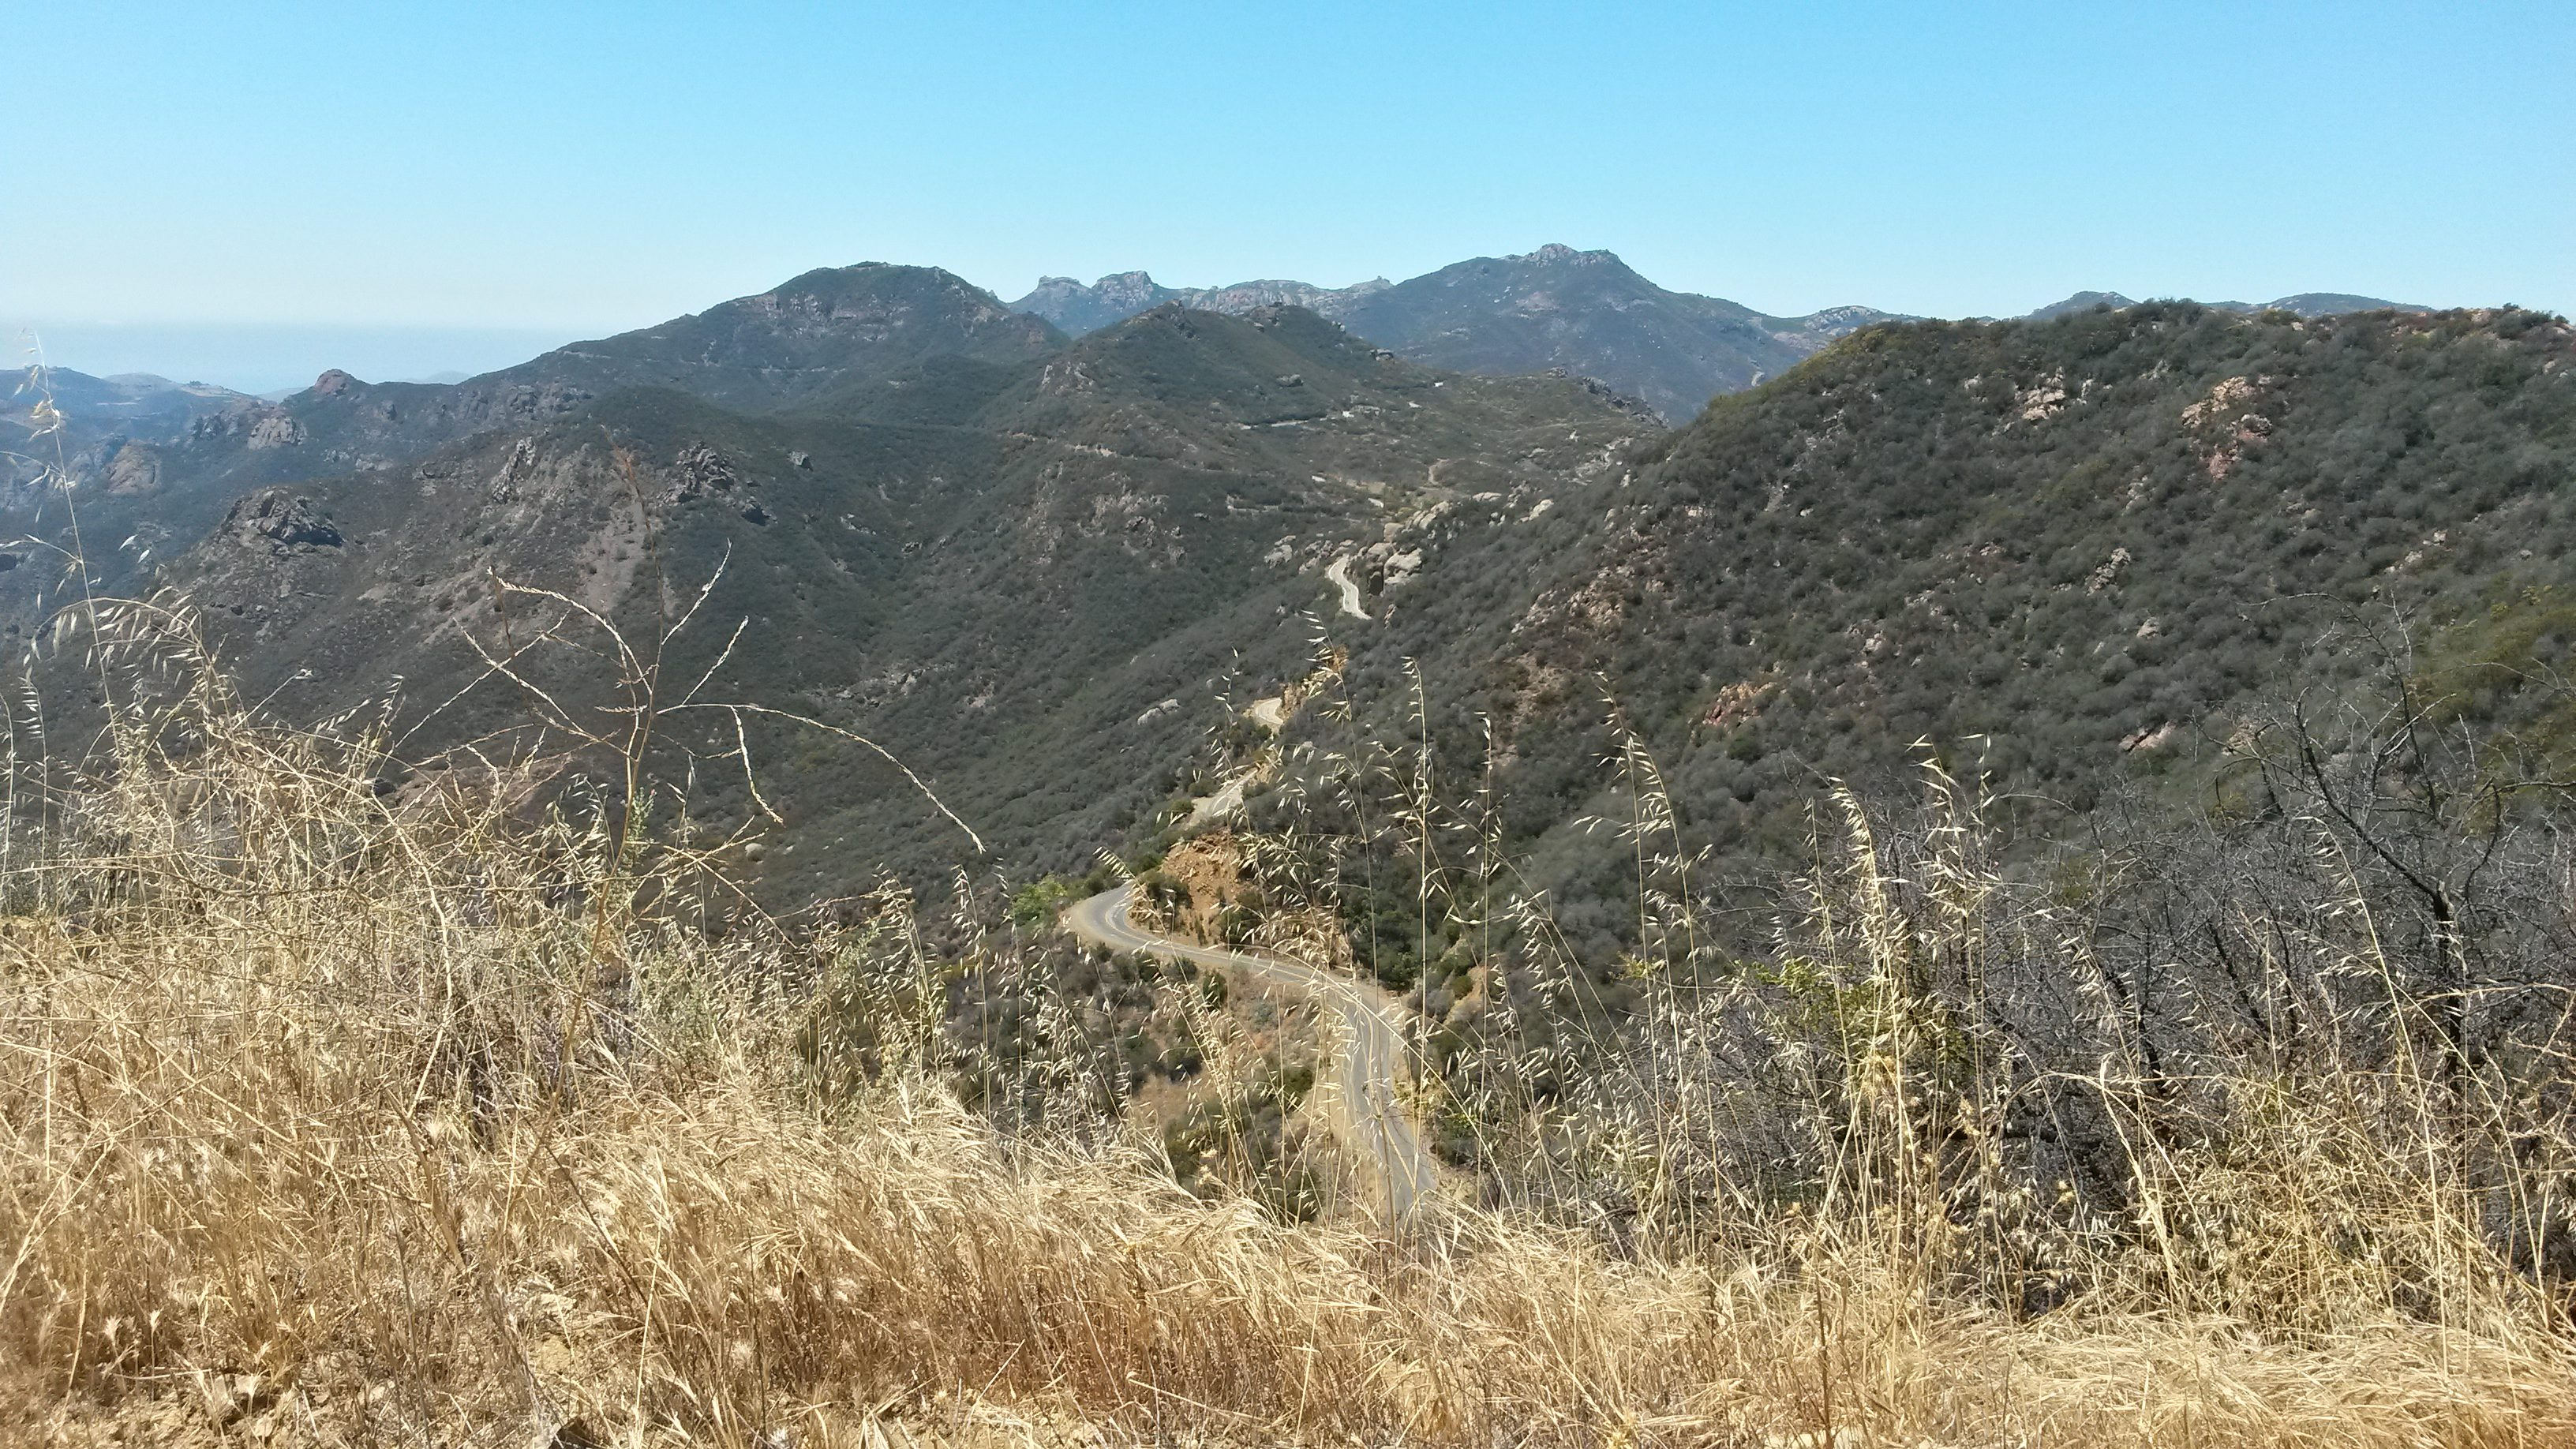 Photo taken fromfrom the Backbone trail, overlooking Yerba Buena